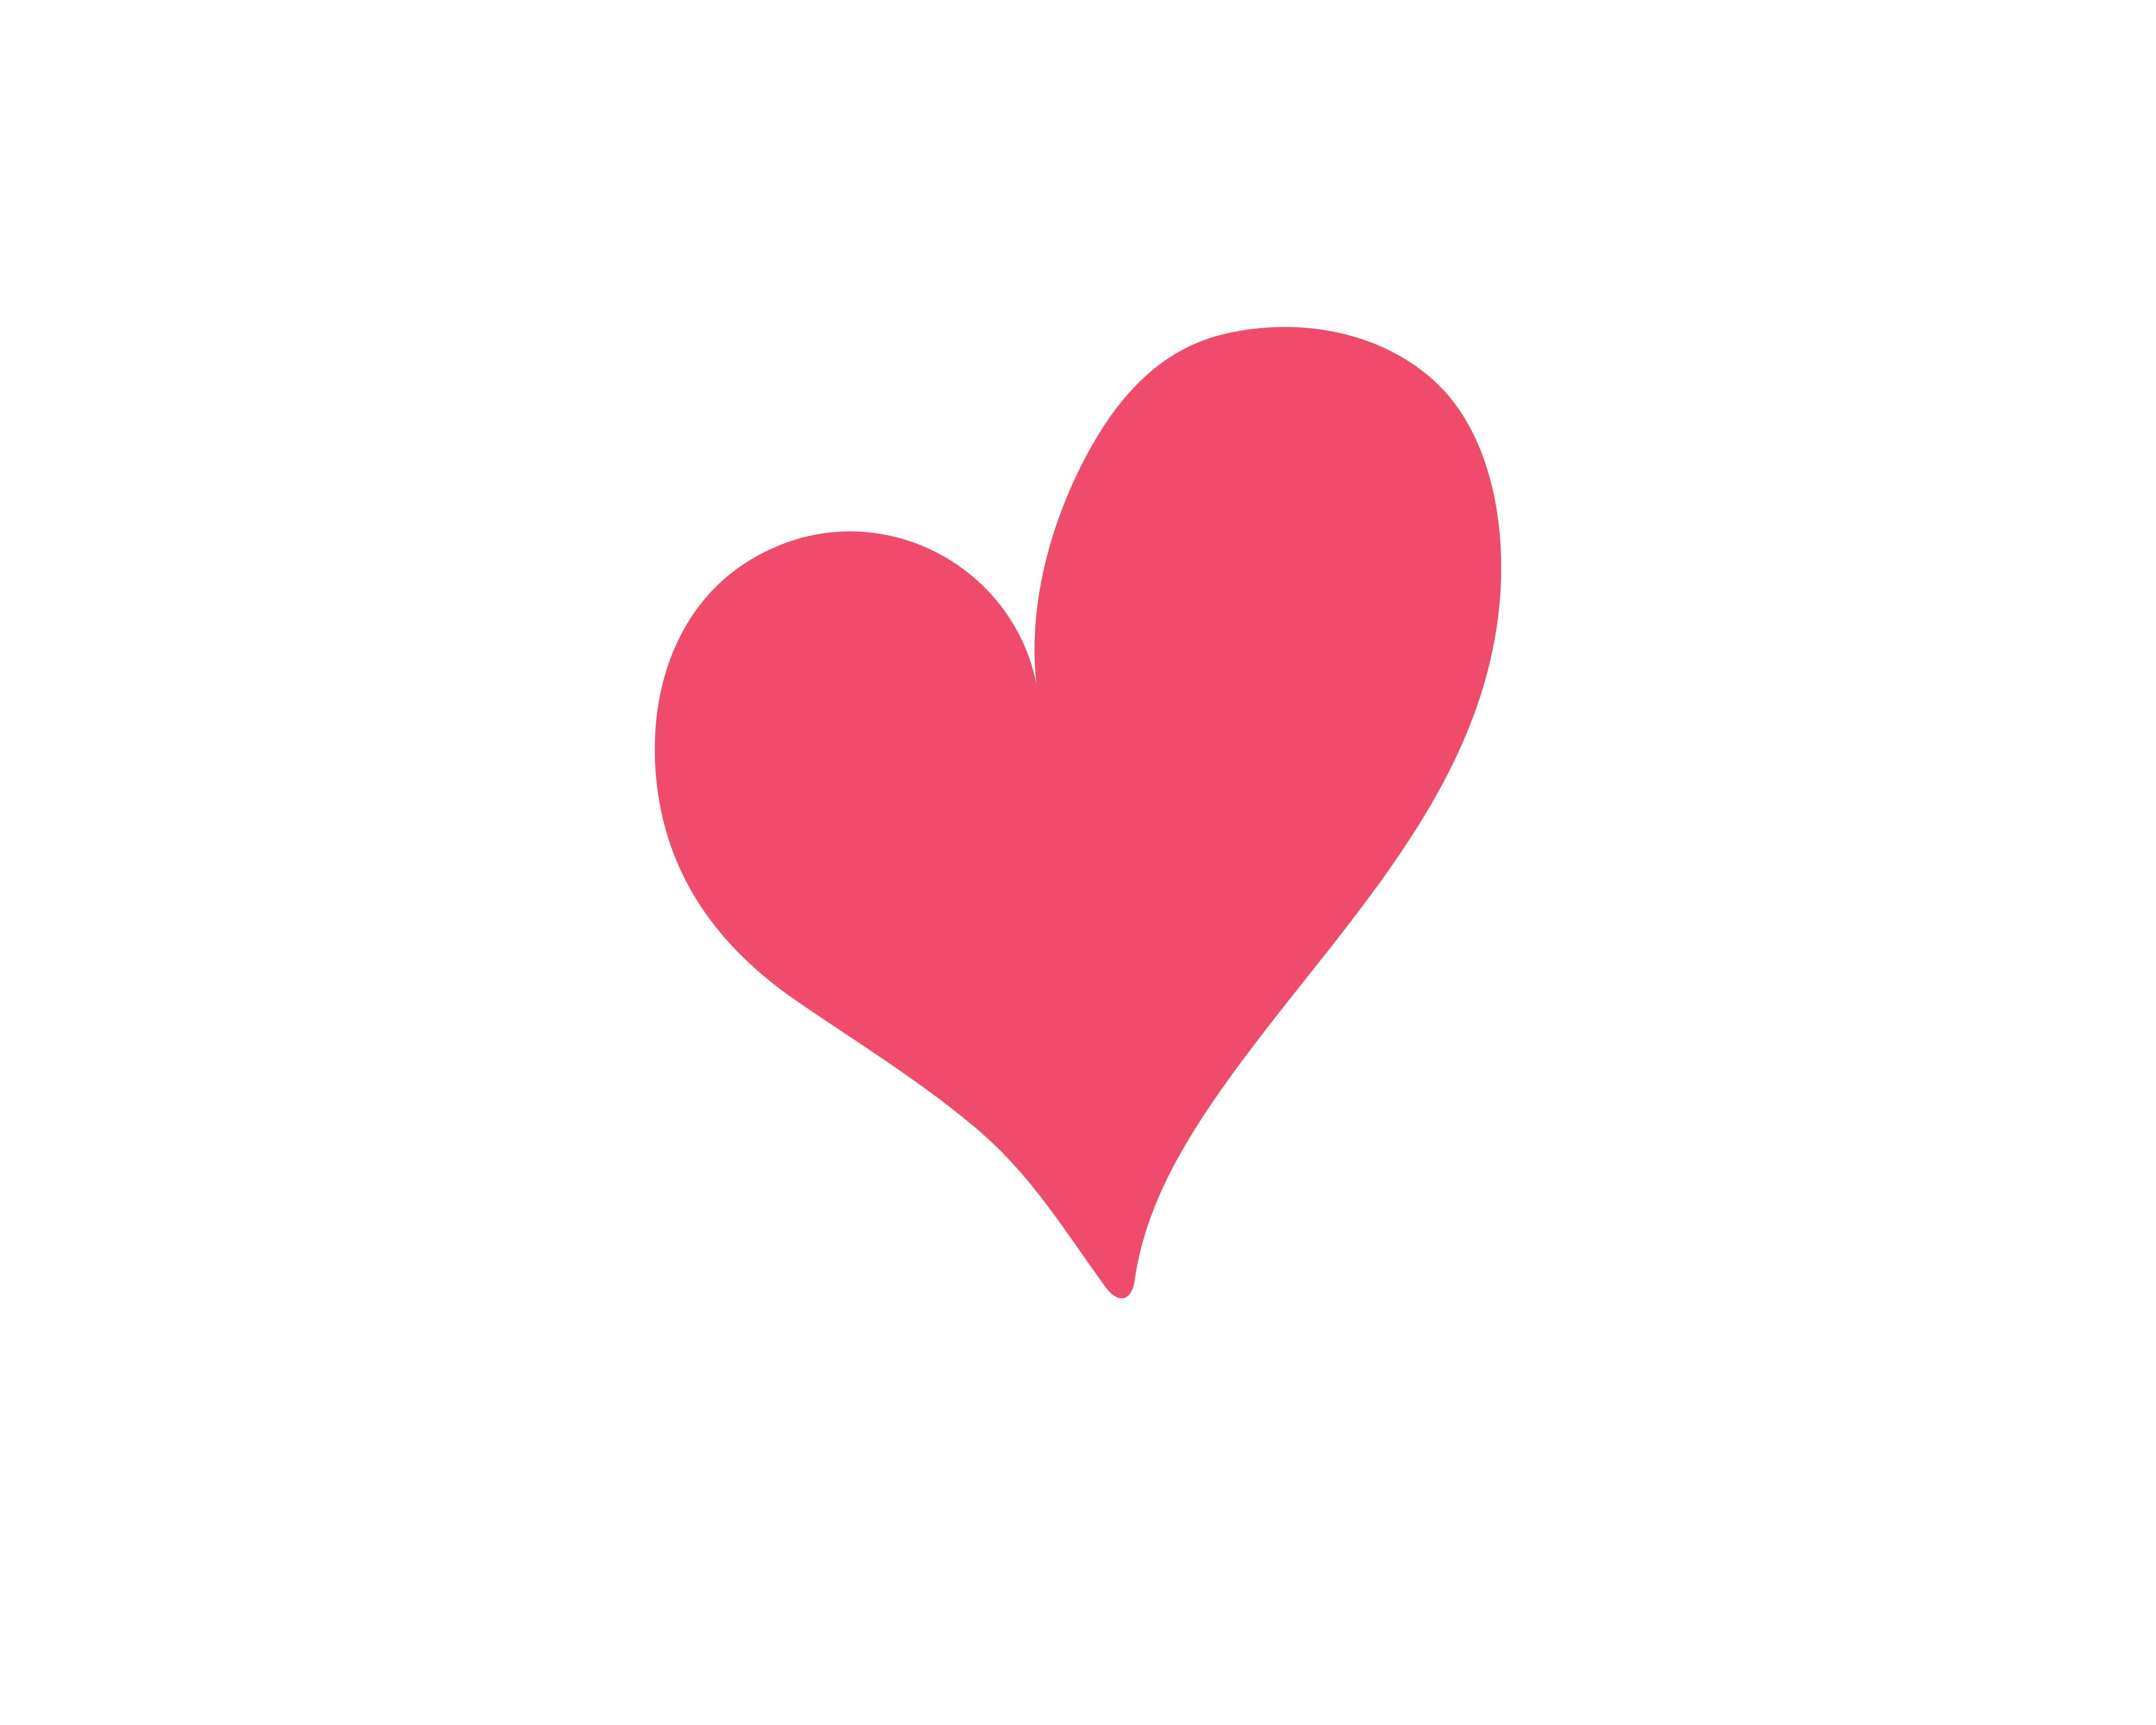 Download Love heart logo and template - Download Free Vectors, Clipart Graphics & Vector Art